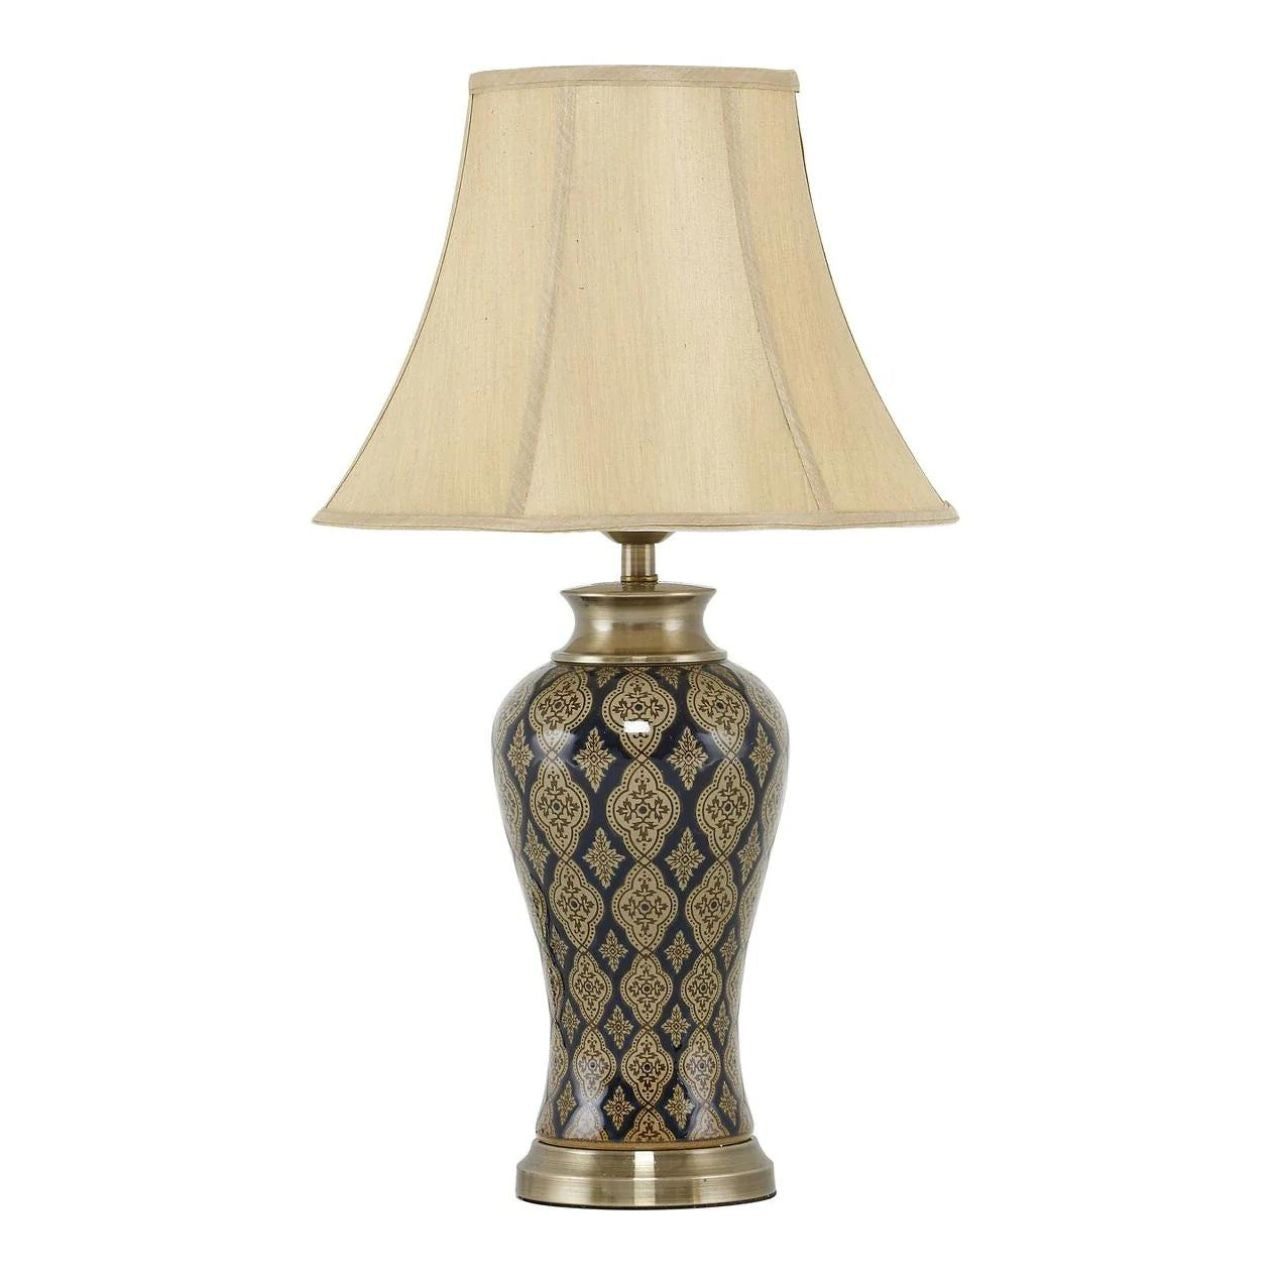 Mindy Brownes Una Table Lamp  - Mindy Brownes Table Lamp. - Oriental inspired pattern ceramic lamp.